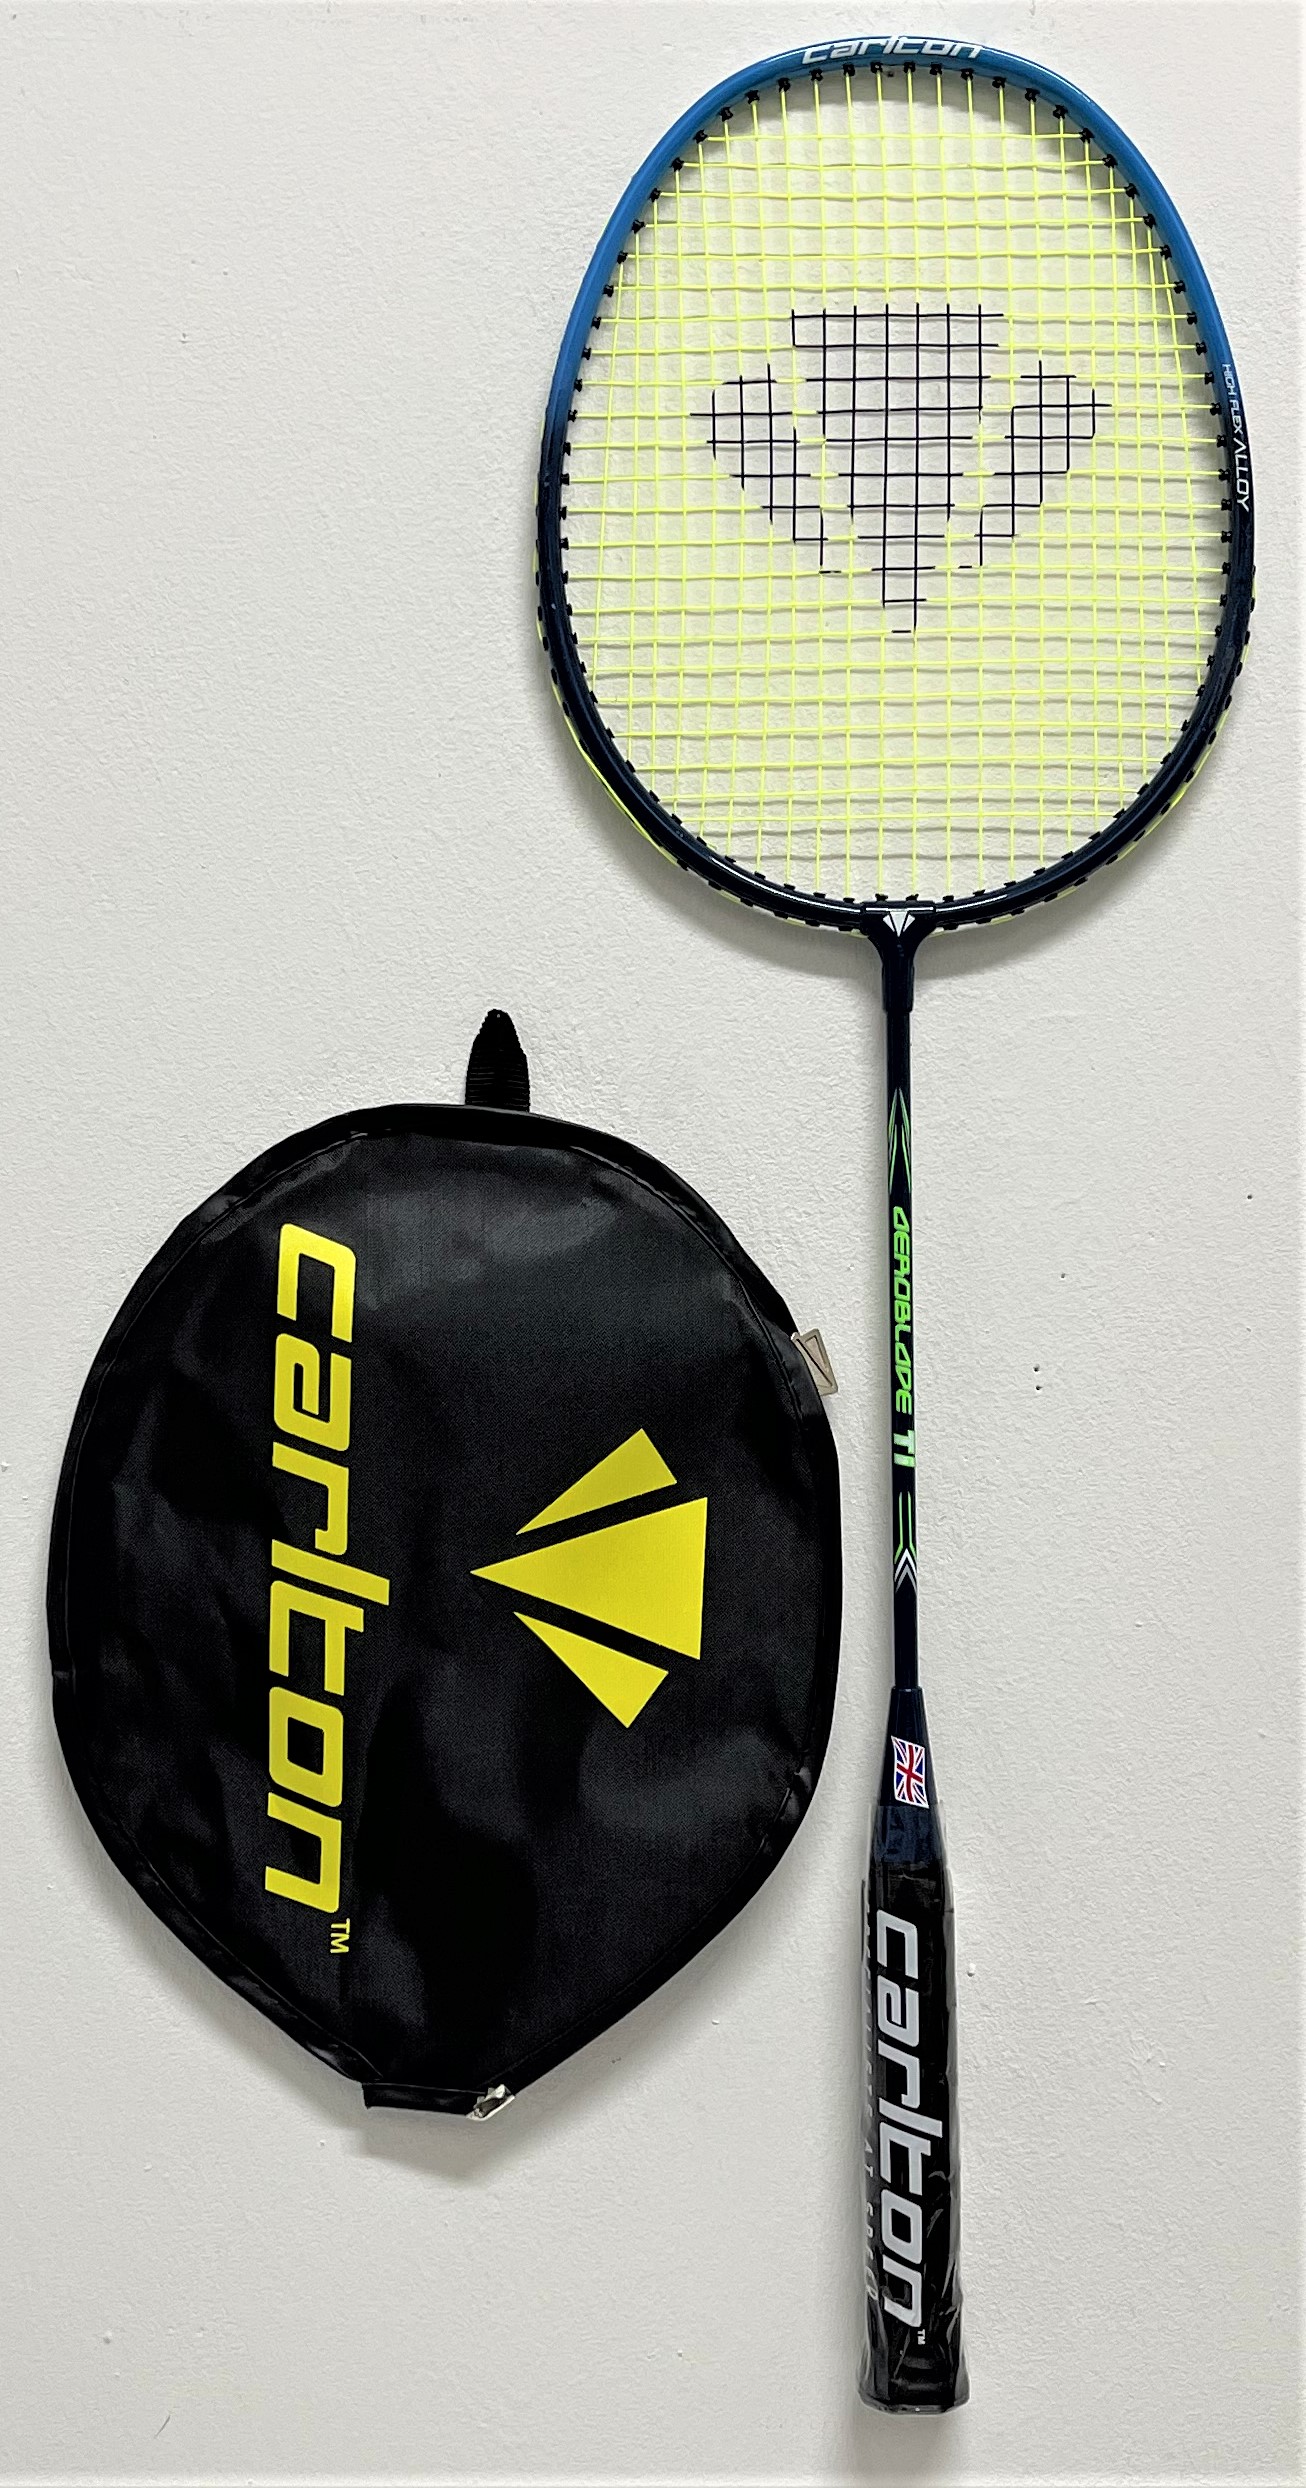 Carlton Beginners Badminton Racket. Model Aeroblade TI. Suitable for School and Outdoors